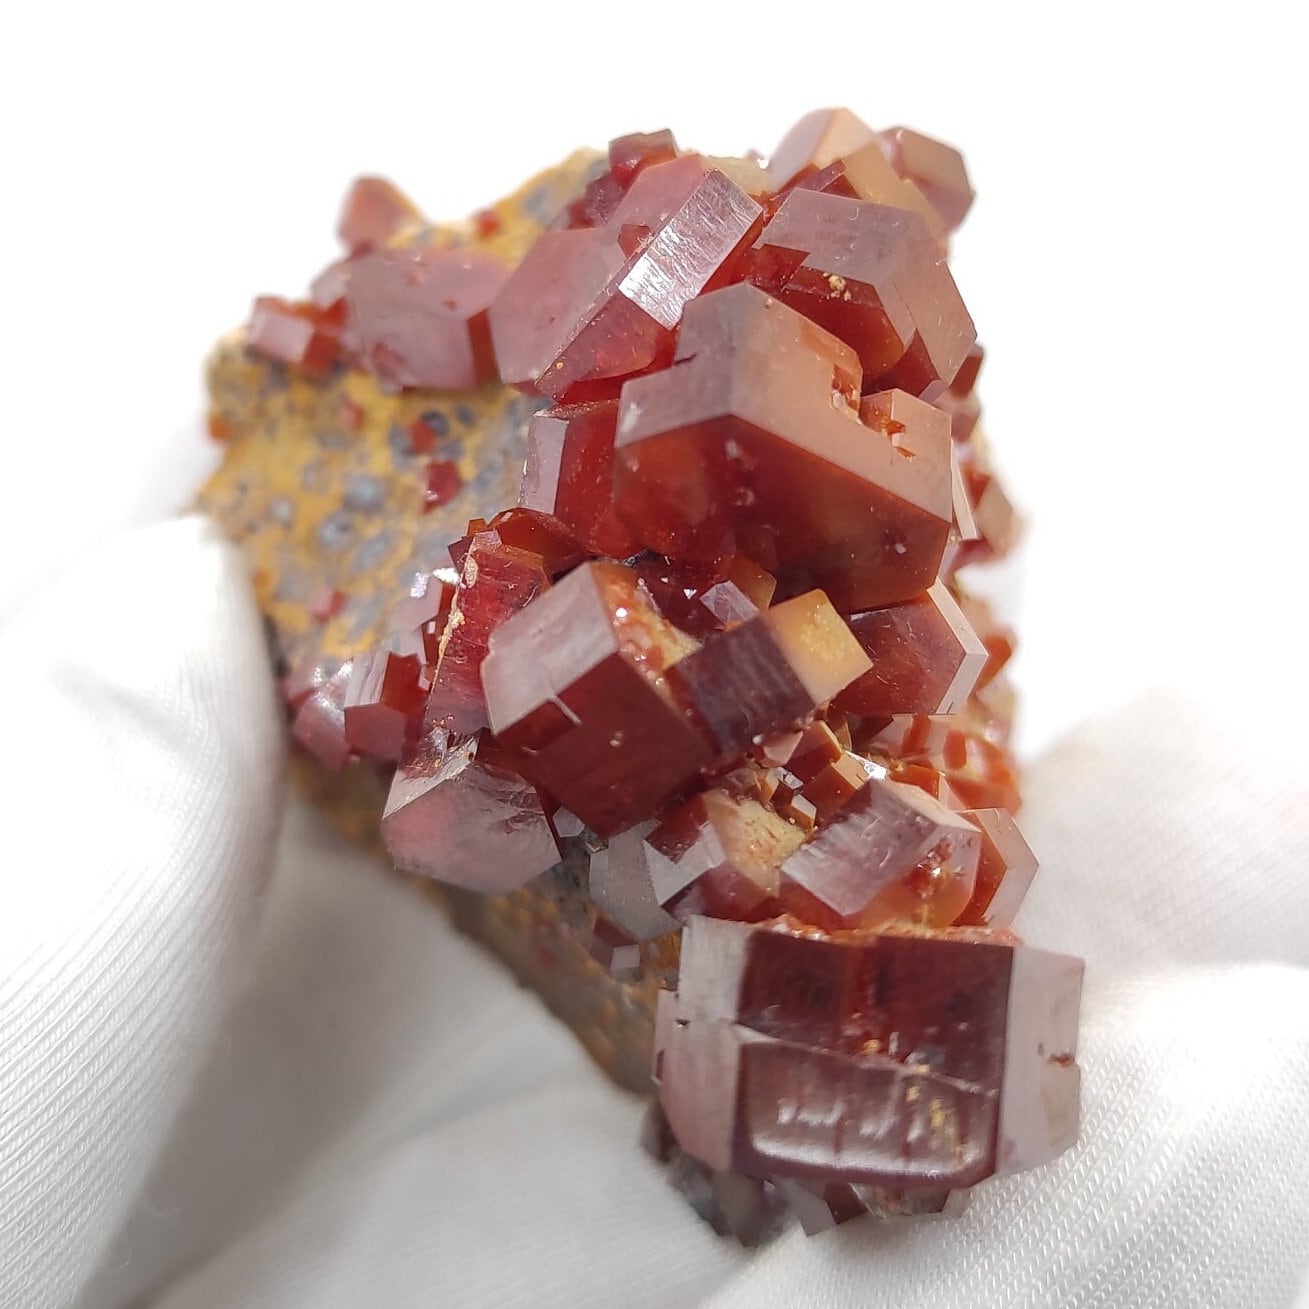 95g Skeletal Vanadinite on Matrix - Mibladen, Morocco - Vanadinite Crystals - Natural Red Vanadinite - Mineral Specimen - Rough Vanadinite